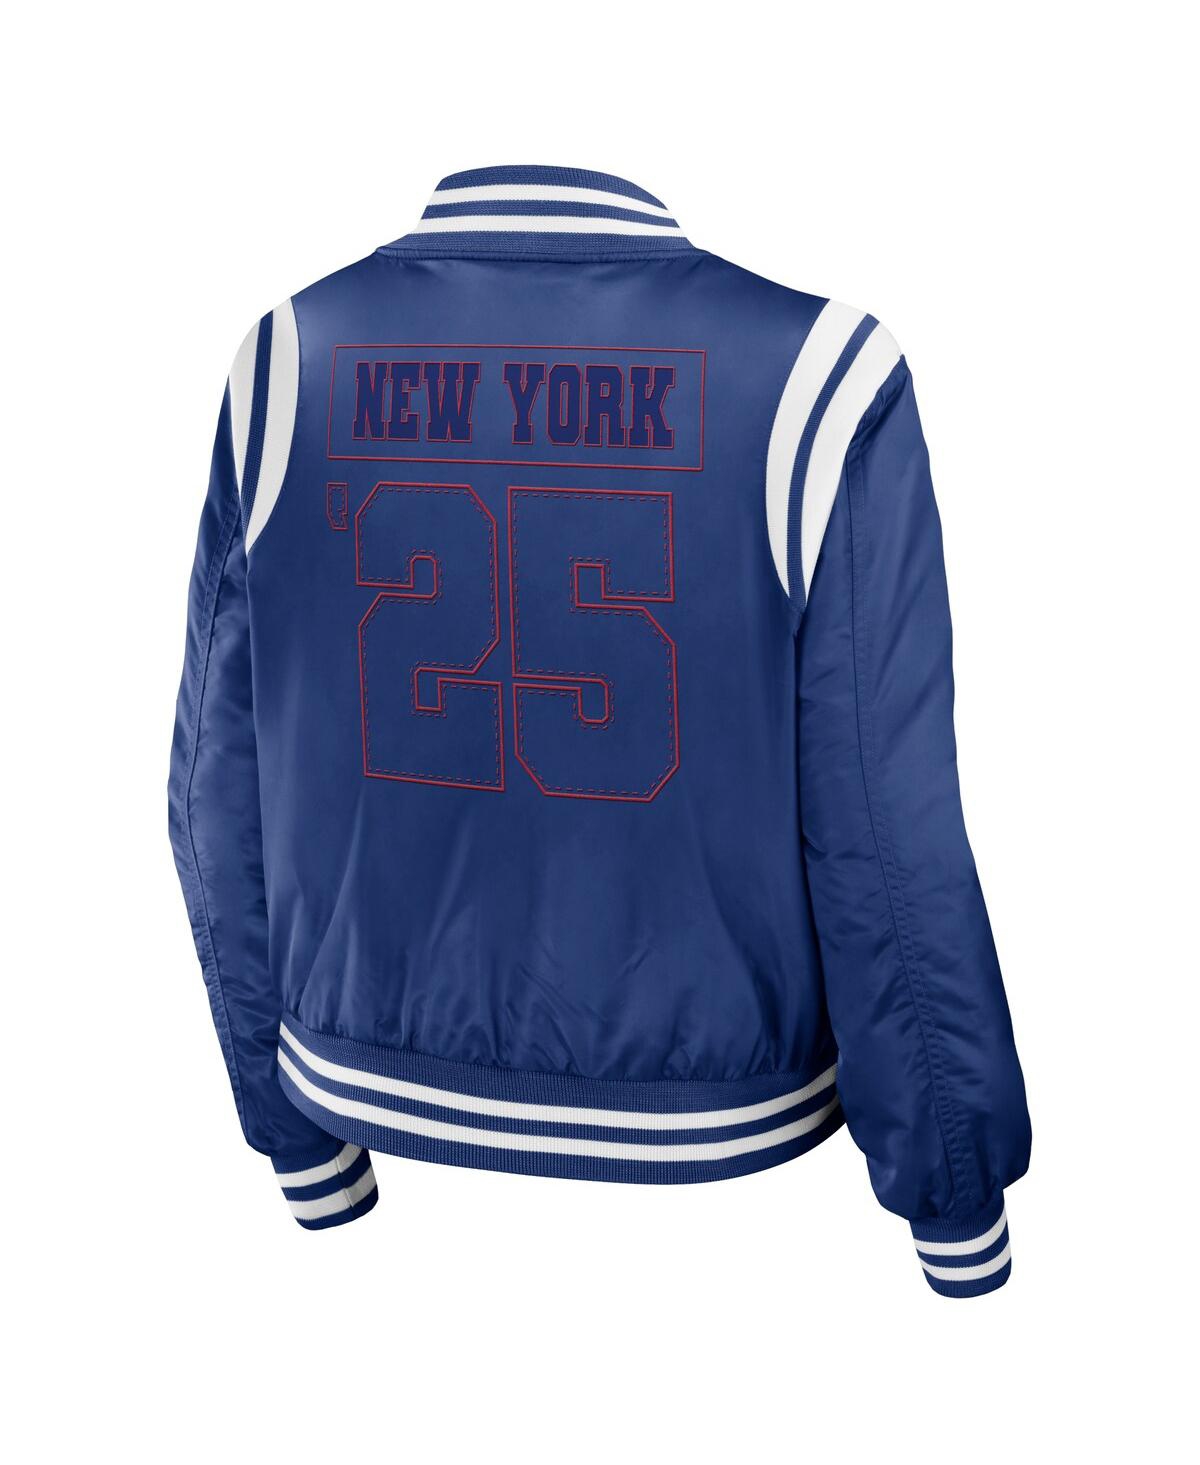 Shop Wear By Erin Andrews Women's  Royal New York Giants Bomber Full-zip Jacket